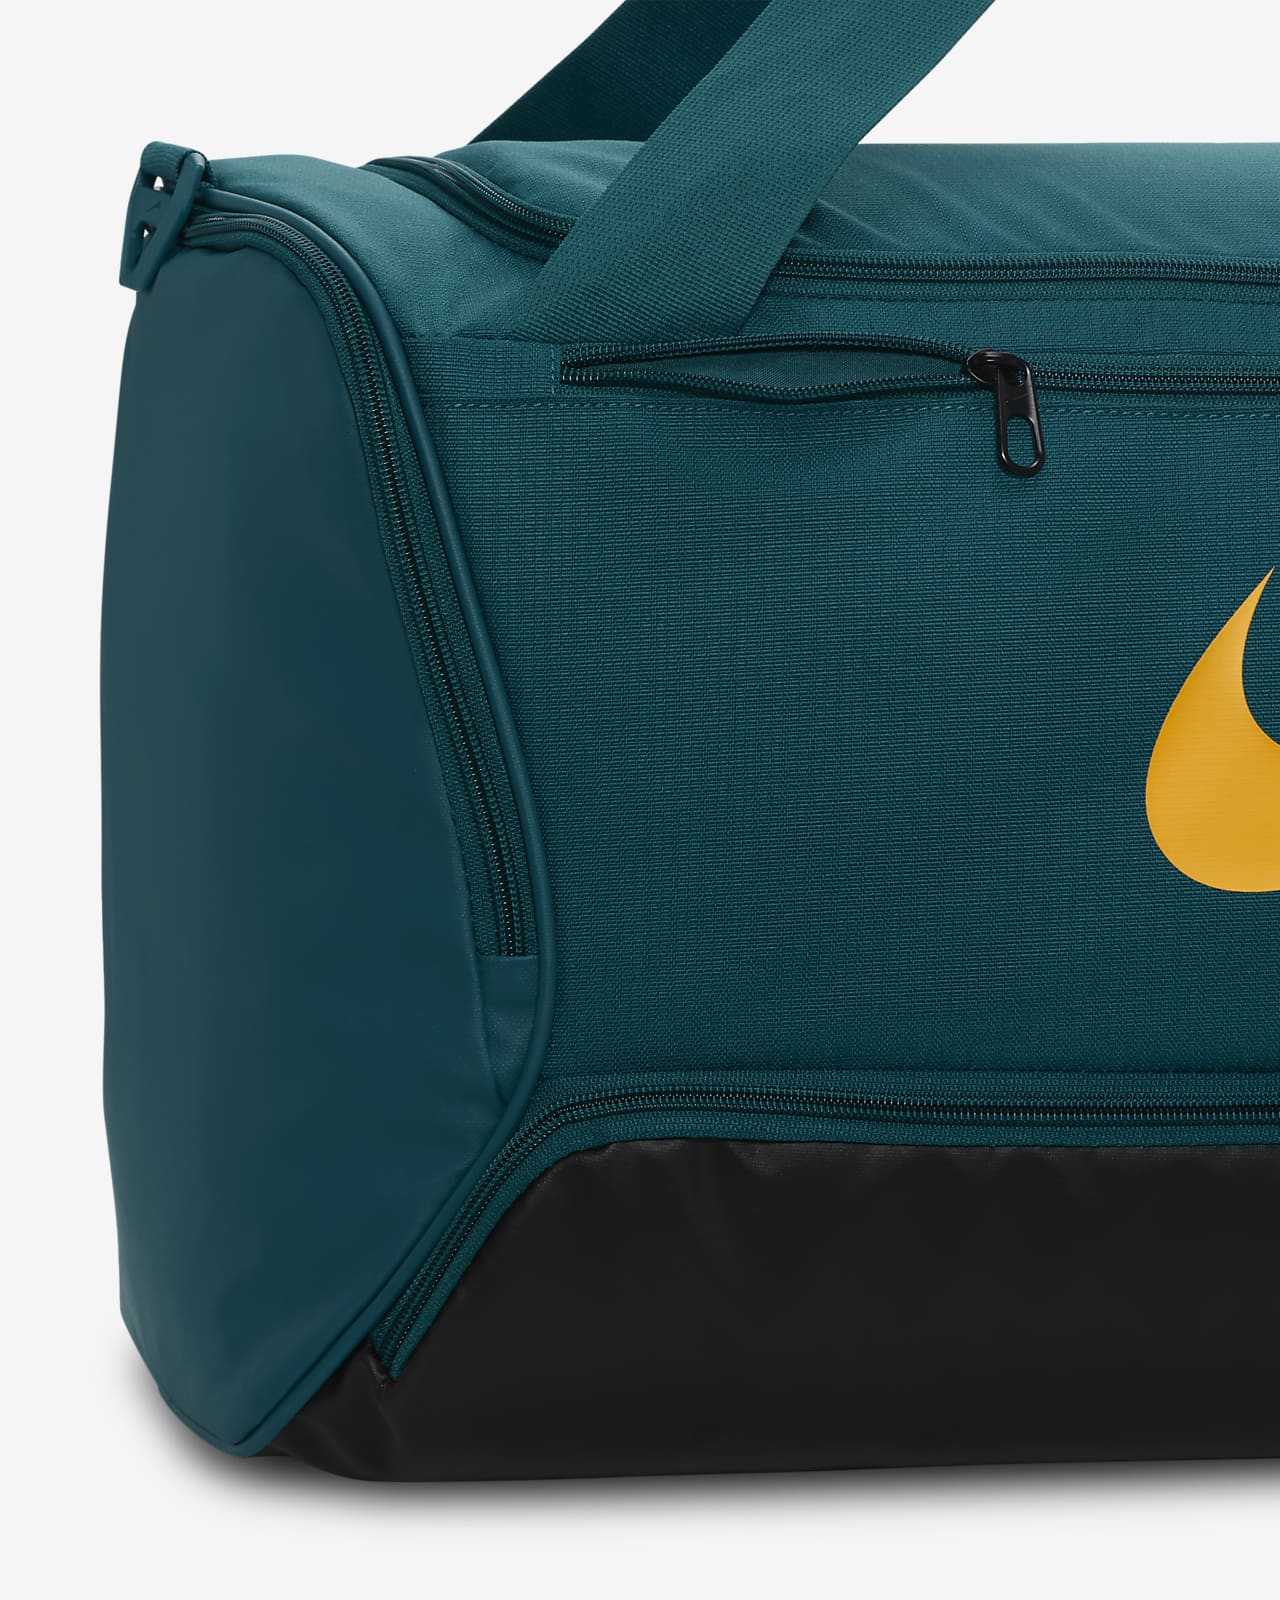 Nike Brasilia 9.5 Training Duffel Bag (Medium, 60L). Nike PH